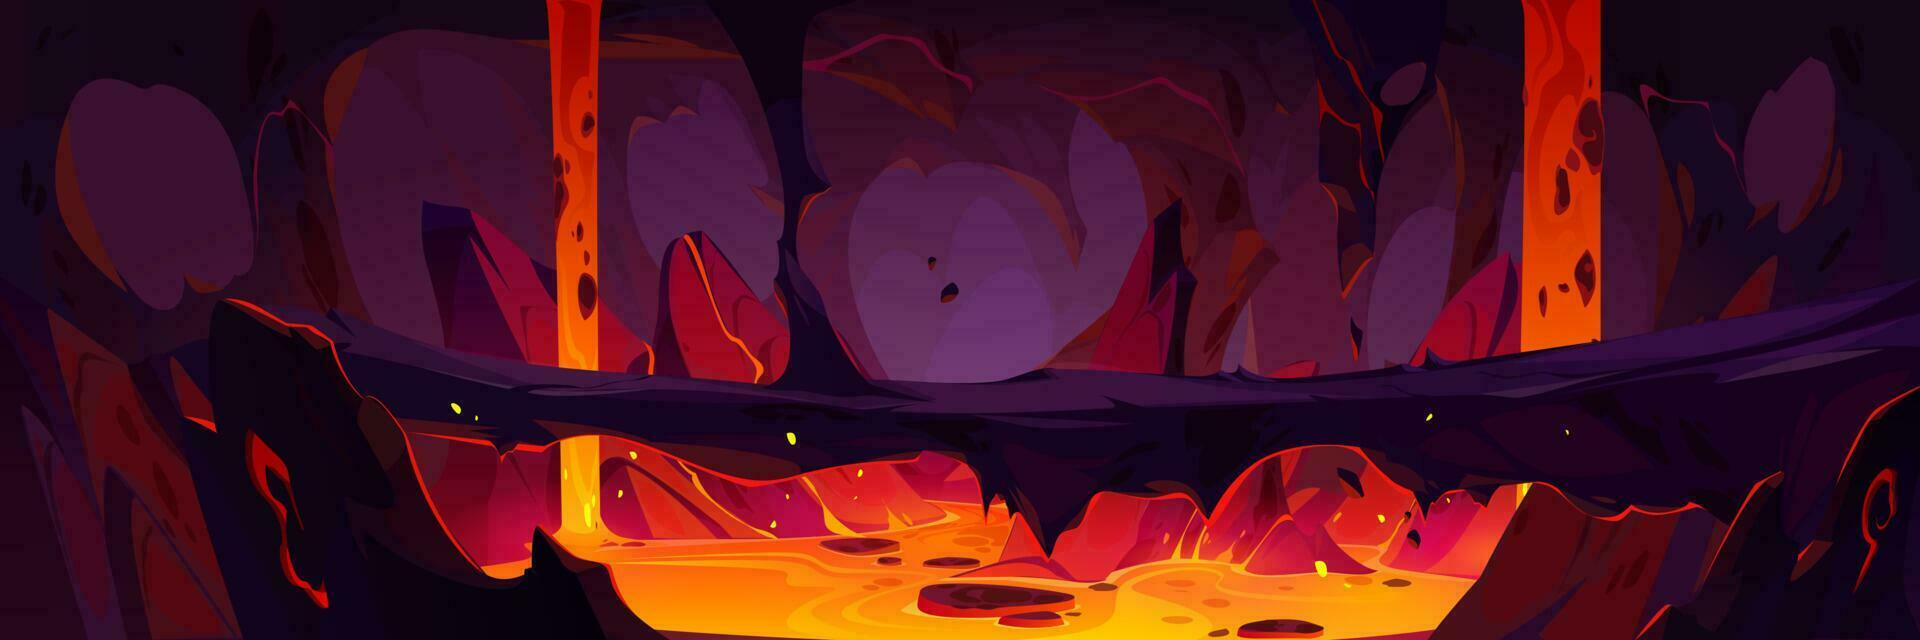 Lava flow inside volcano cave vector